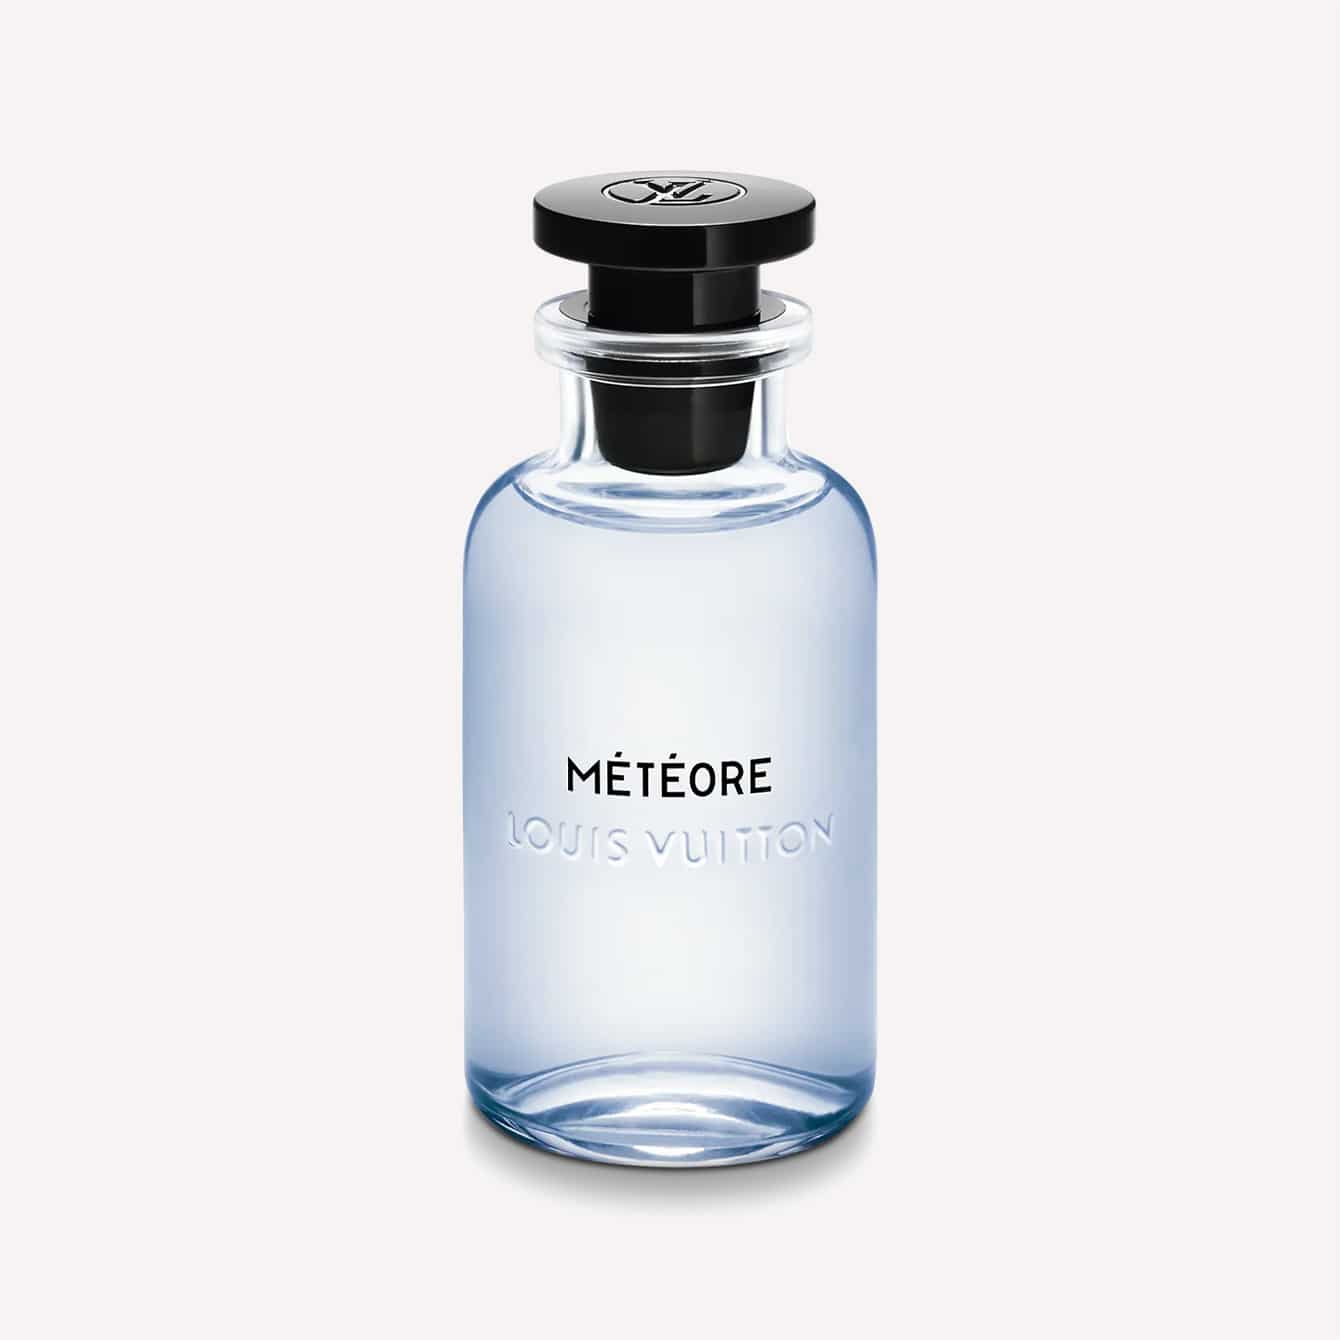 MÉTÉORE- Louis Vuitton Fragrance for Men 